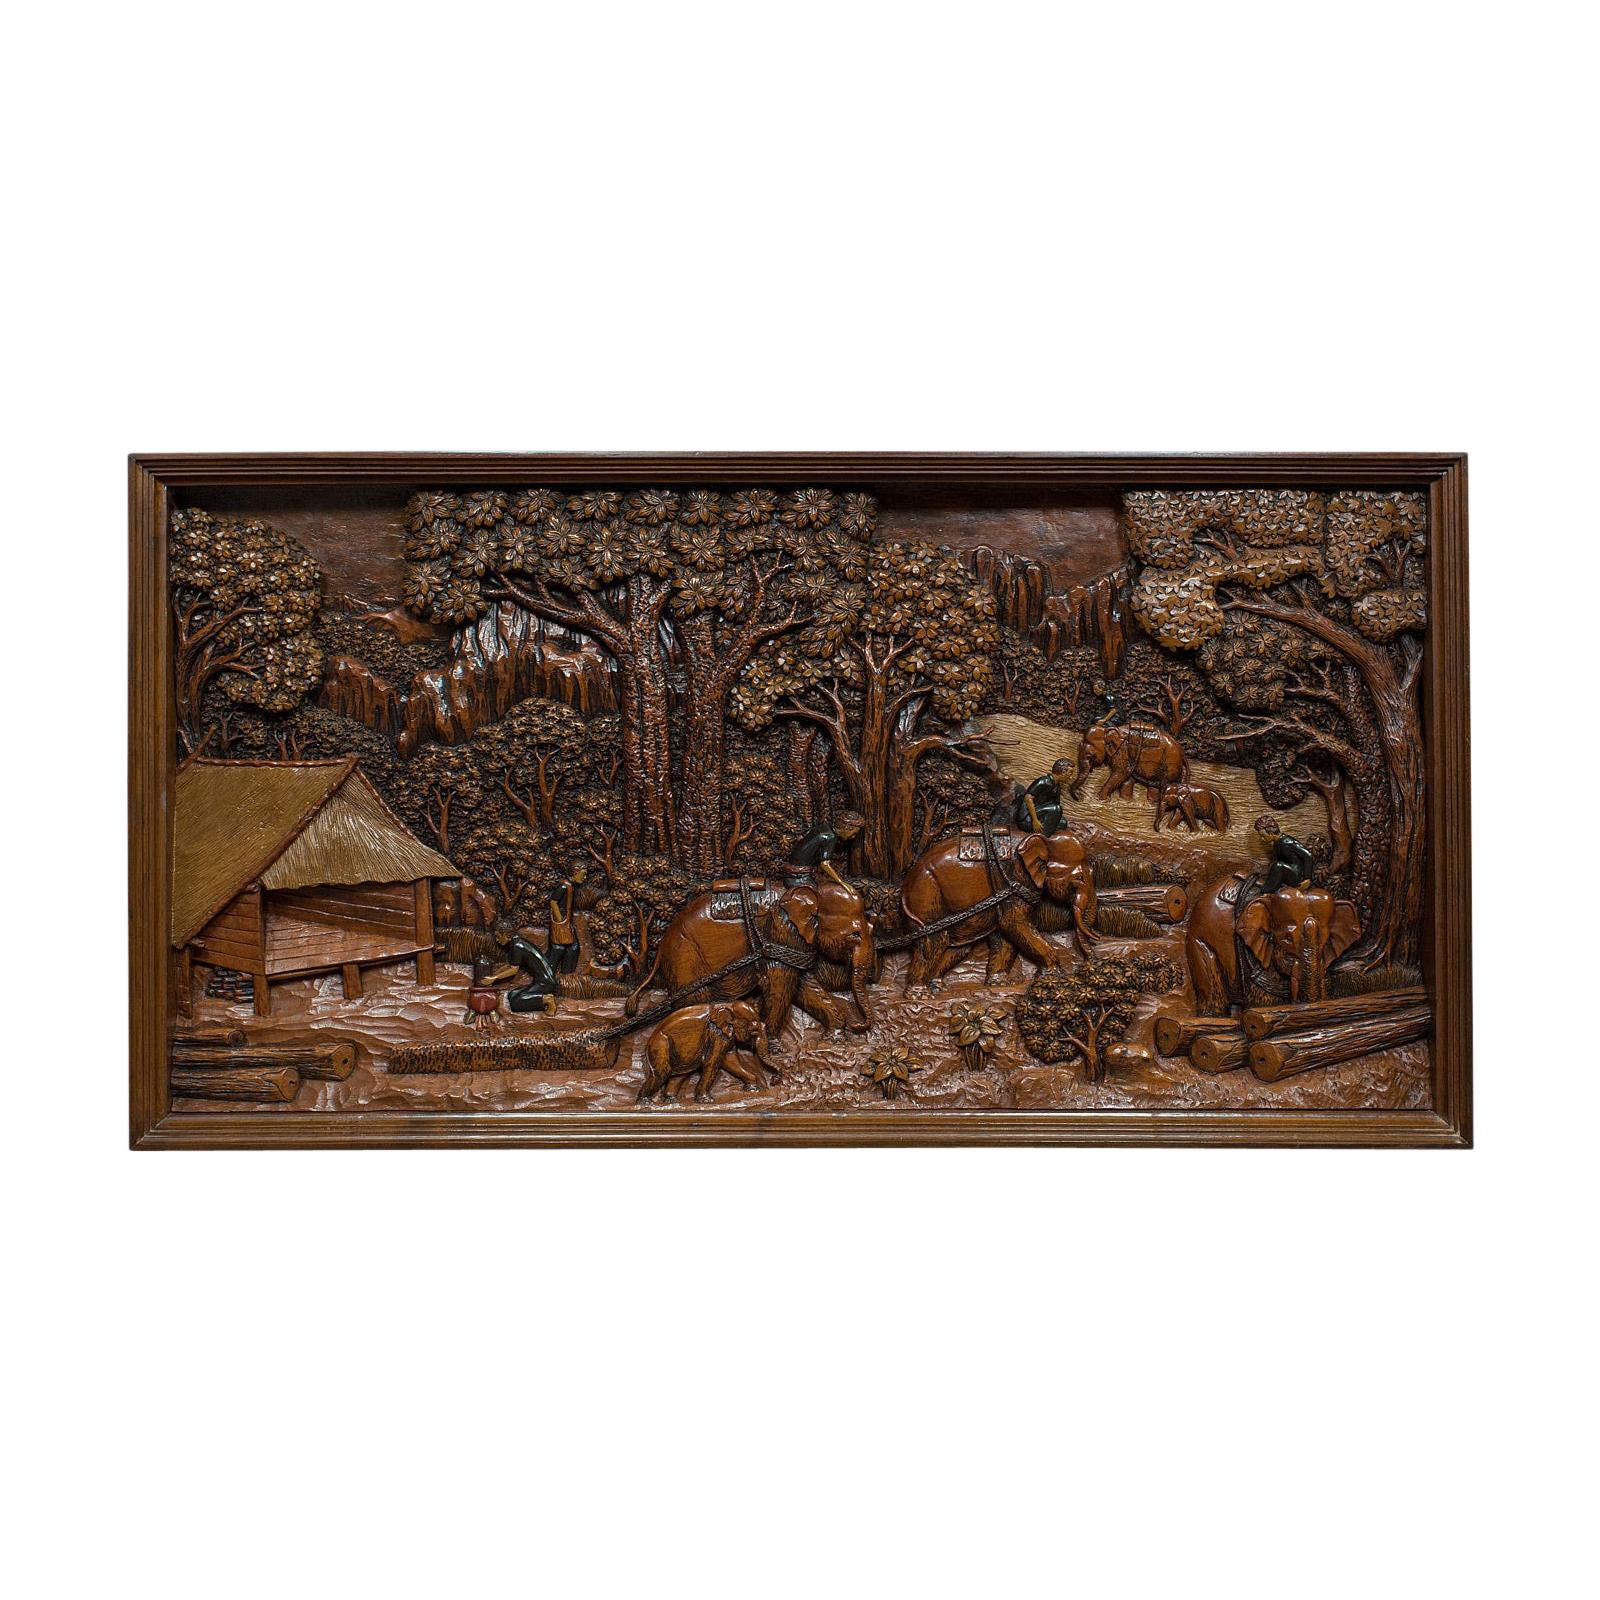 Carved Wall Panel, English, Ironwood, Decorative, Frieze, Jungle, 20th Century